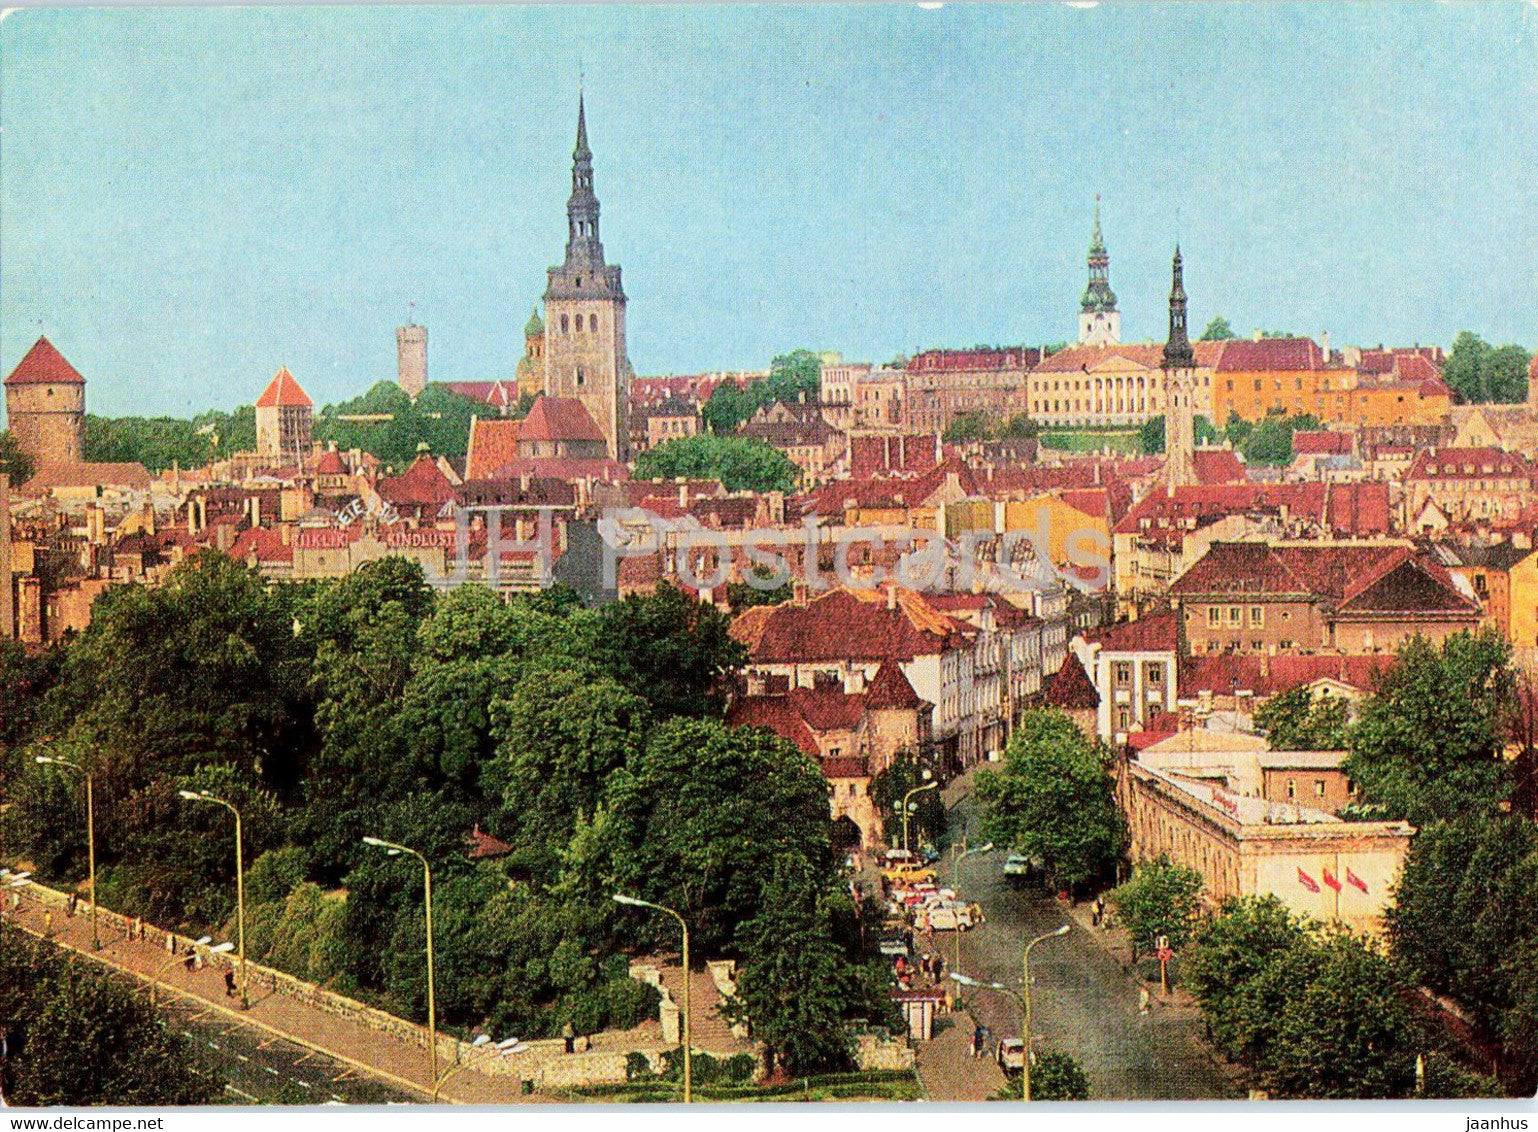 Tallinn - Old Town view - postal stationery - 1977 - Estonia USSR - unused - JH Postcards